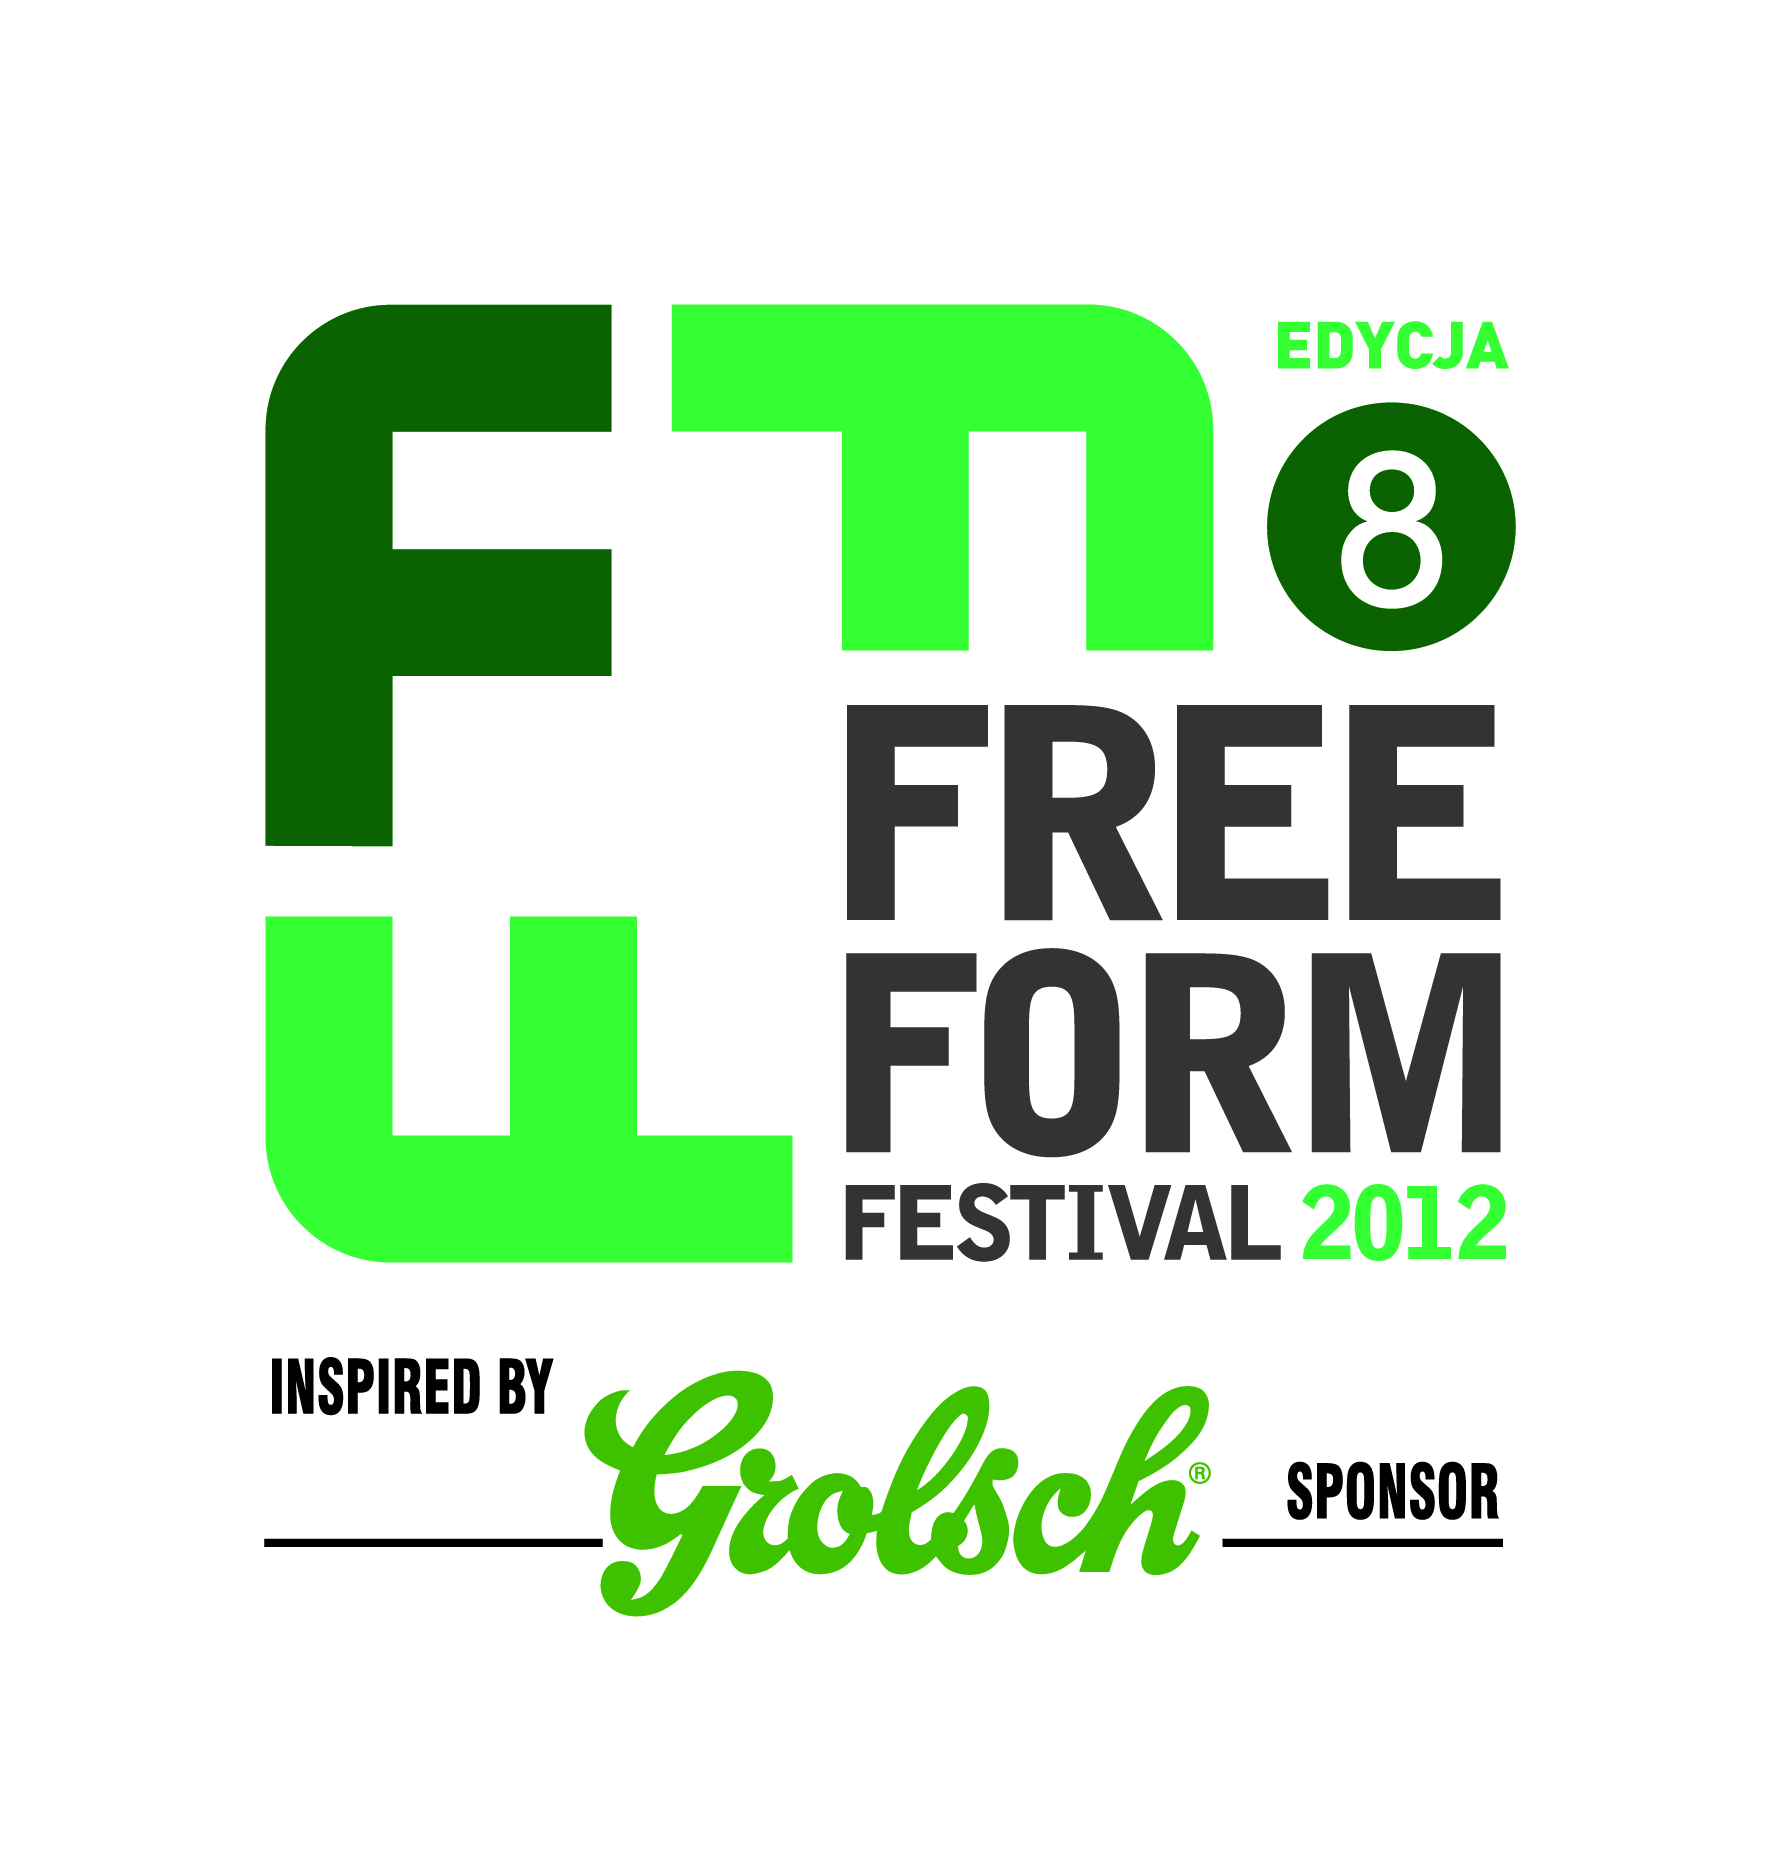 Free Form Festival 2012 (fot. serwis prasowy)